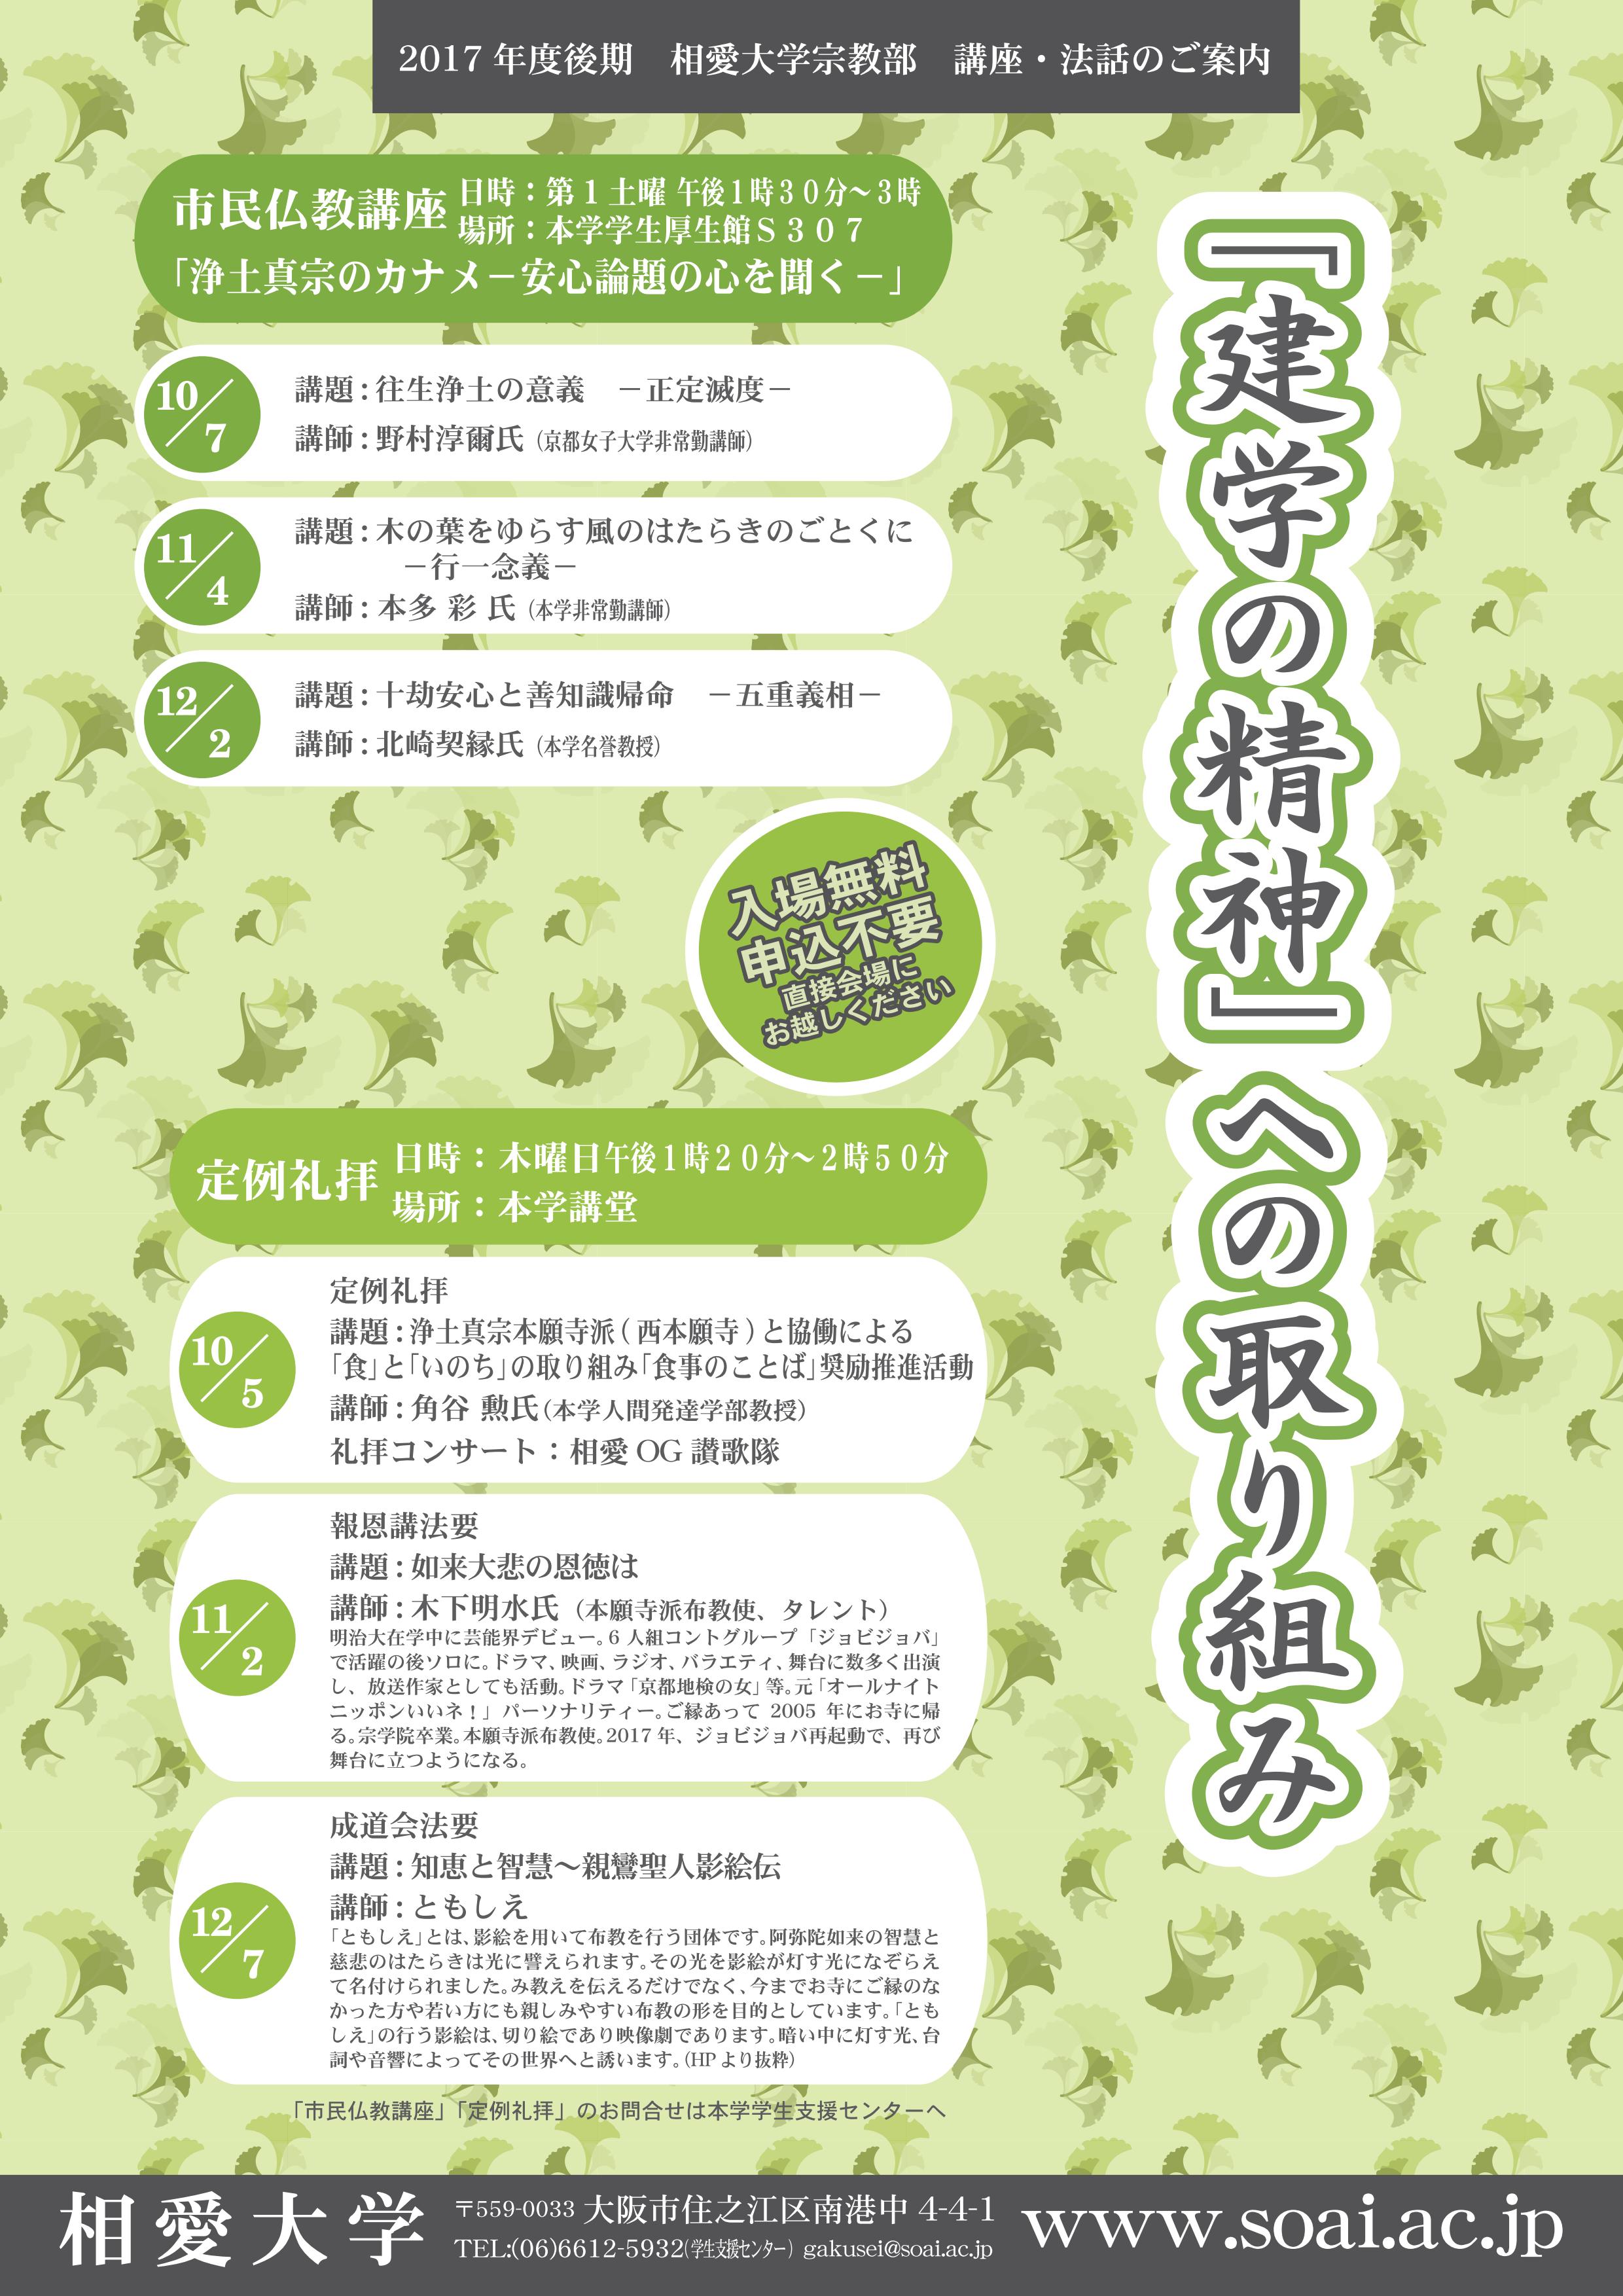 http://www.soai.ac.jp/information/lecture/2017_kouki_shukyou.jpg